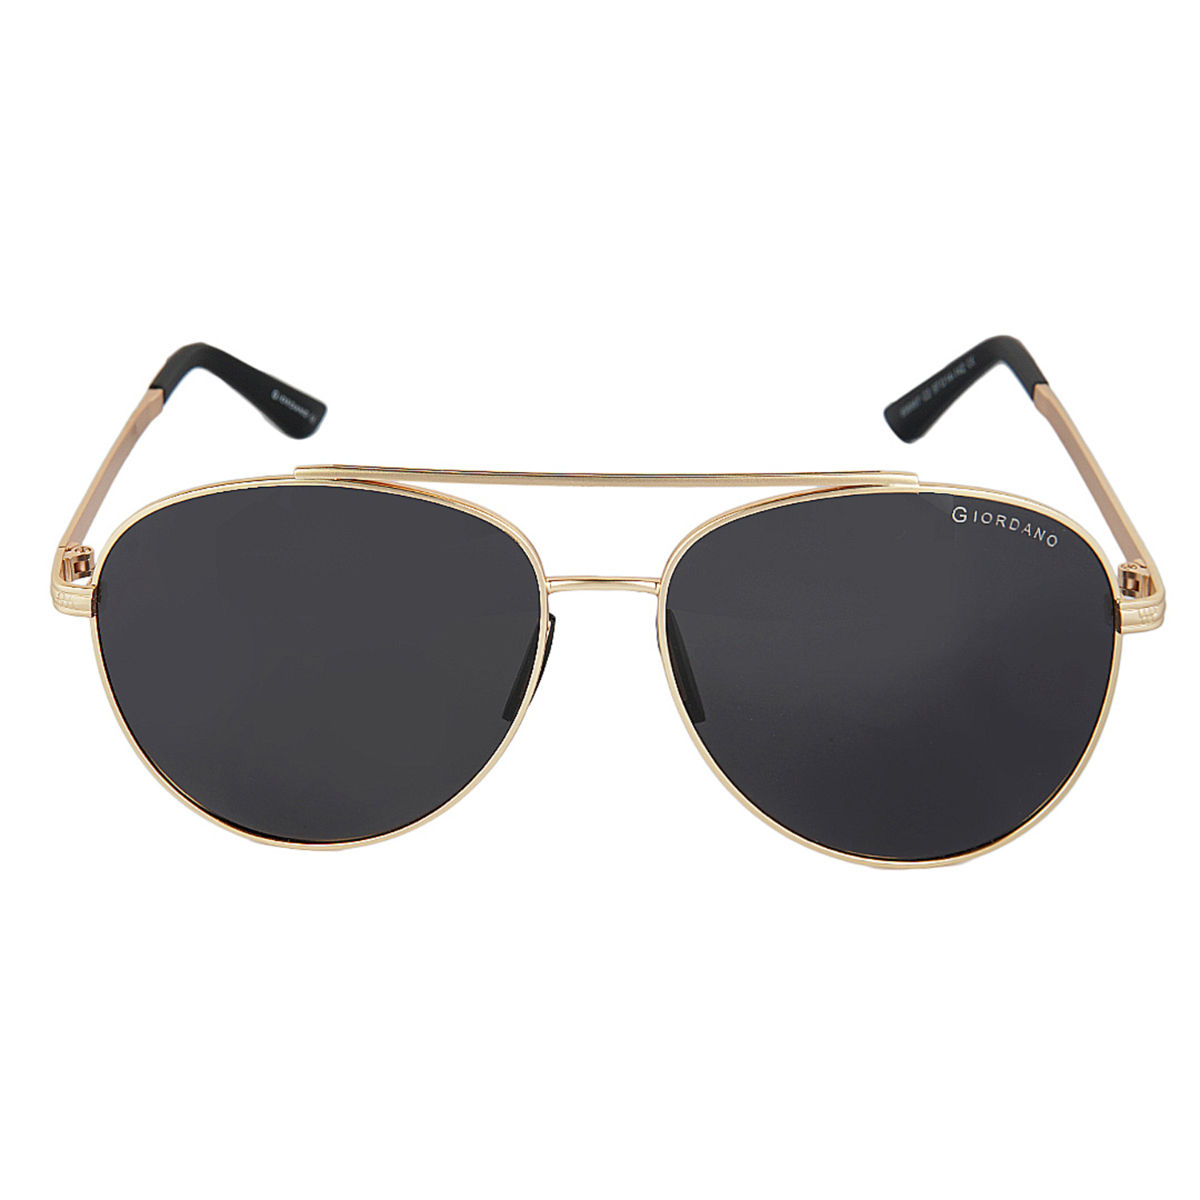 Buy Giordano Polarized Sunglasses Uv Protected Use for Men & Women -  Ga90302C02 (56) online